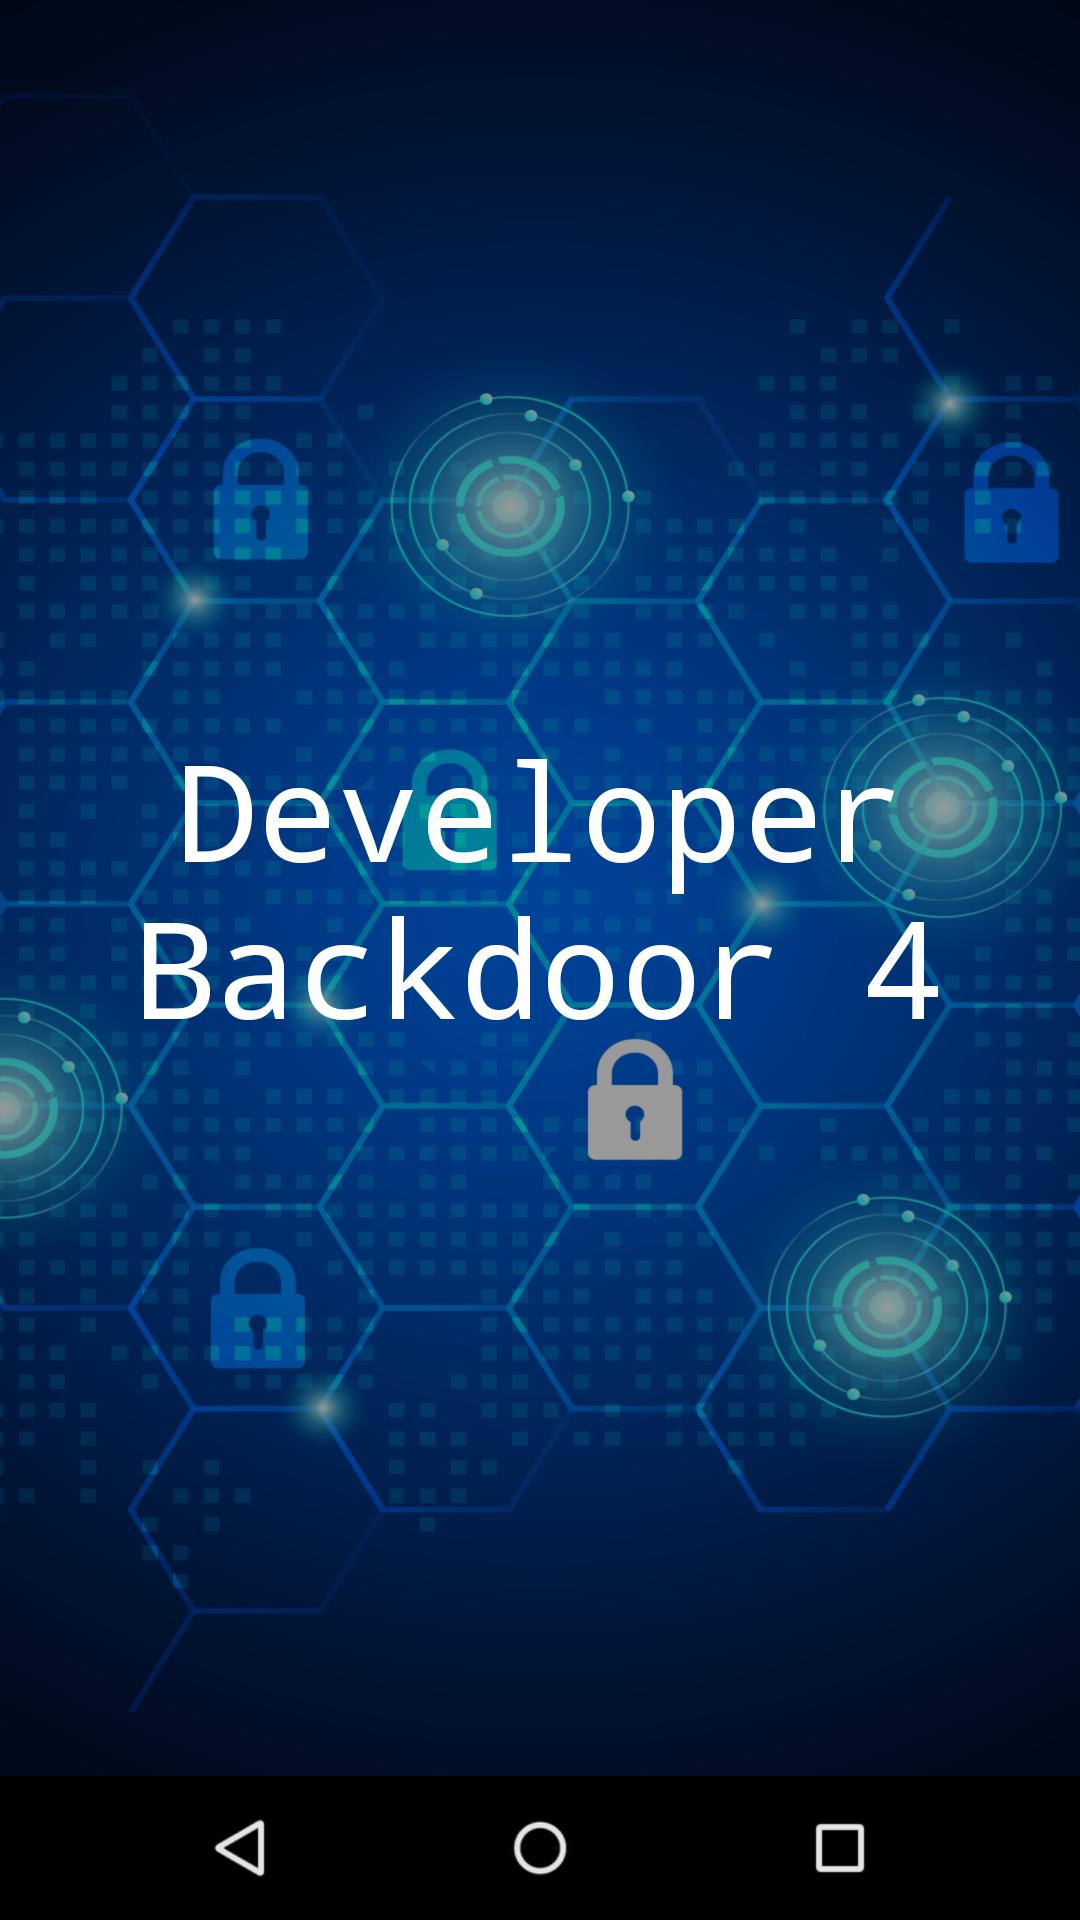 Developer Backdoor 4 For Android Apk Download - backdoor download roblox